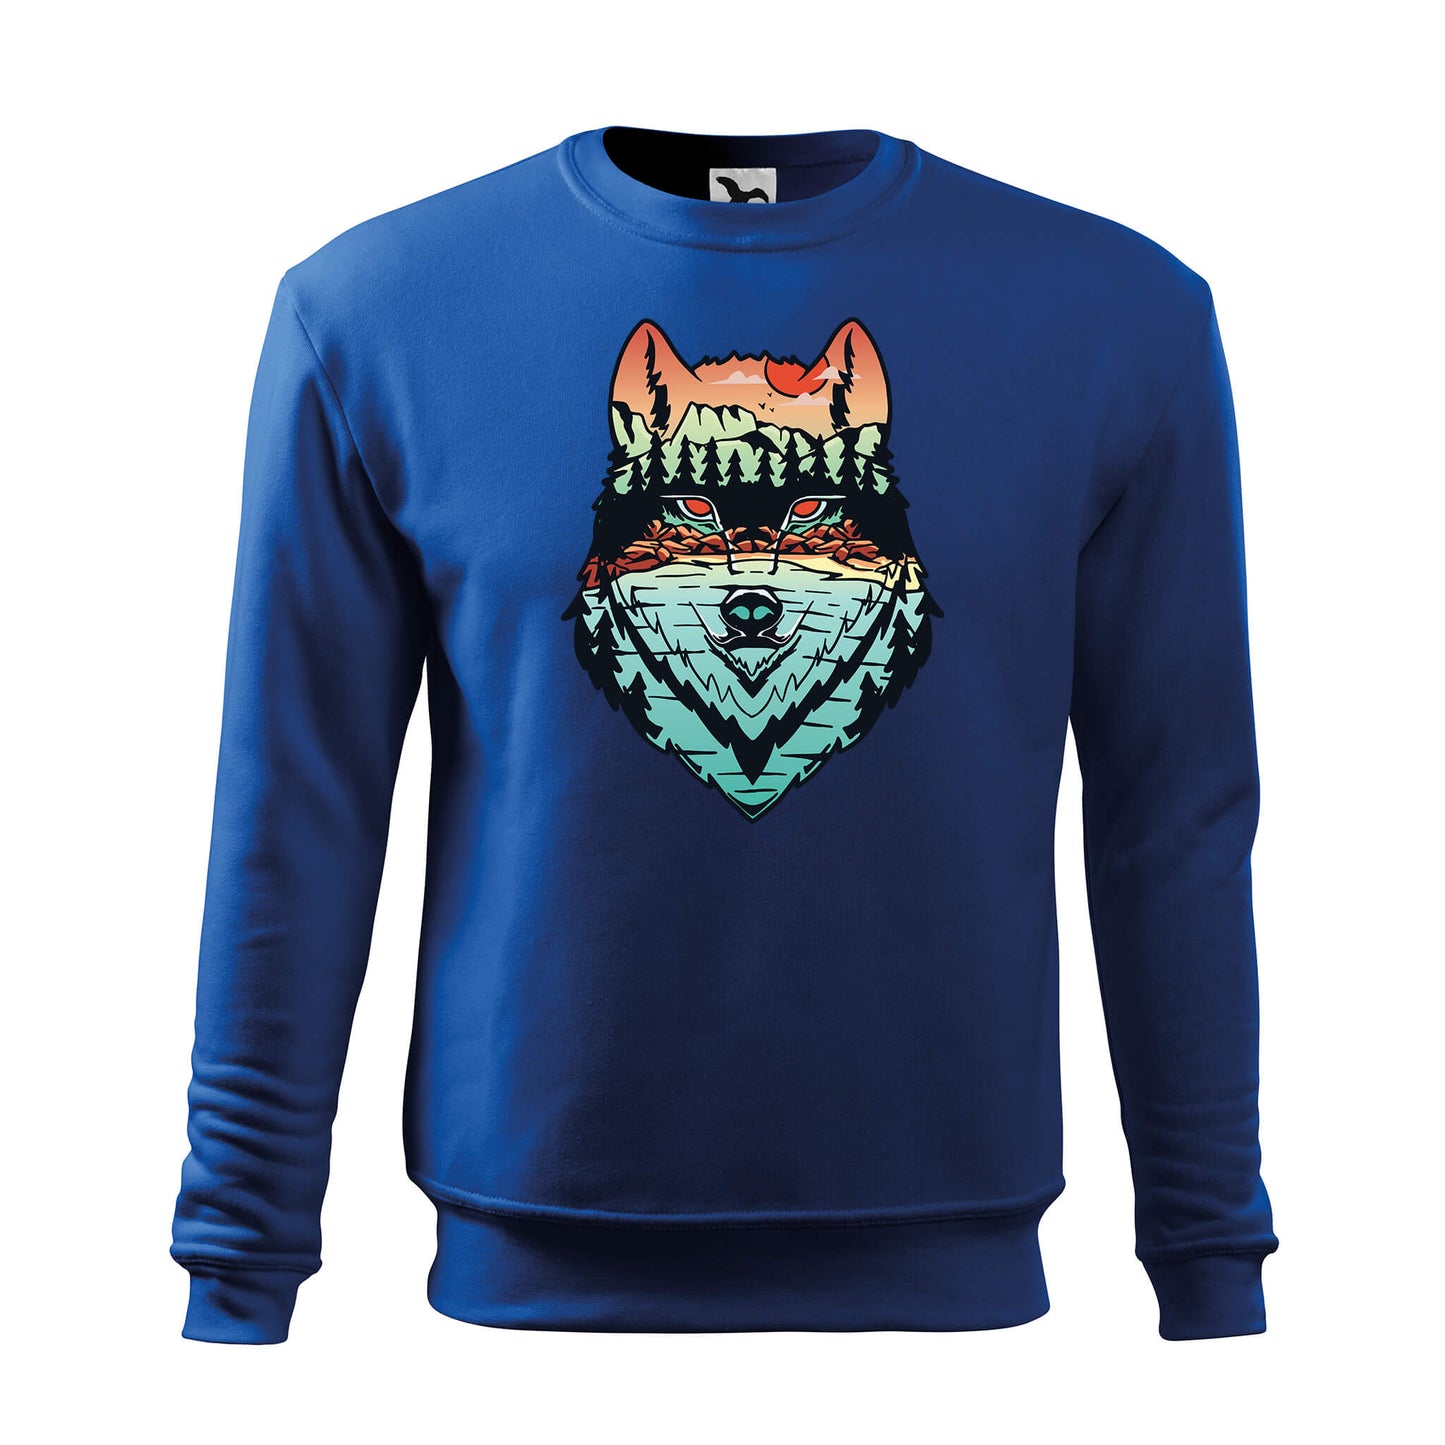 Wolf art sweatshirt - mens